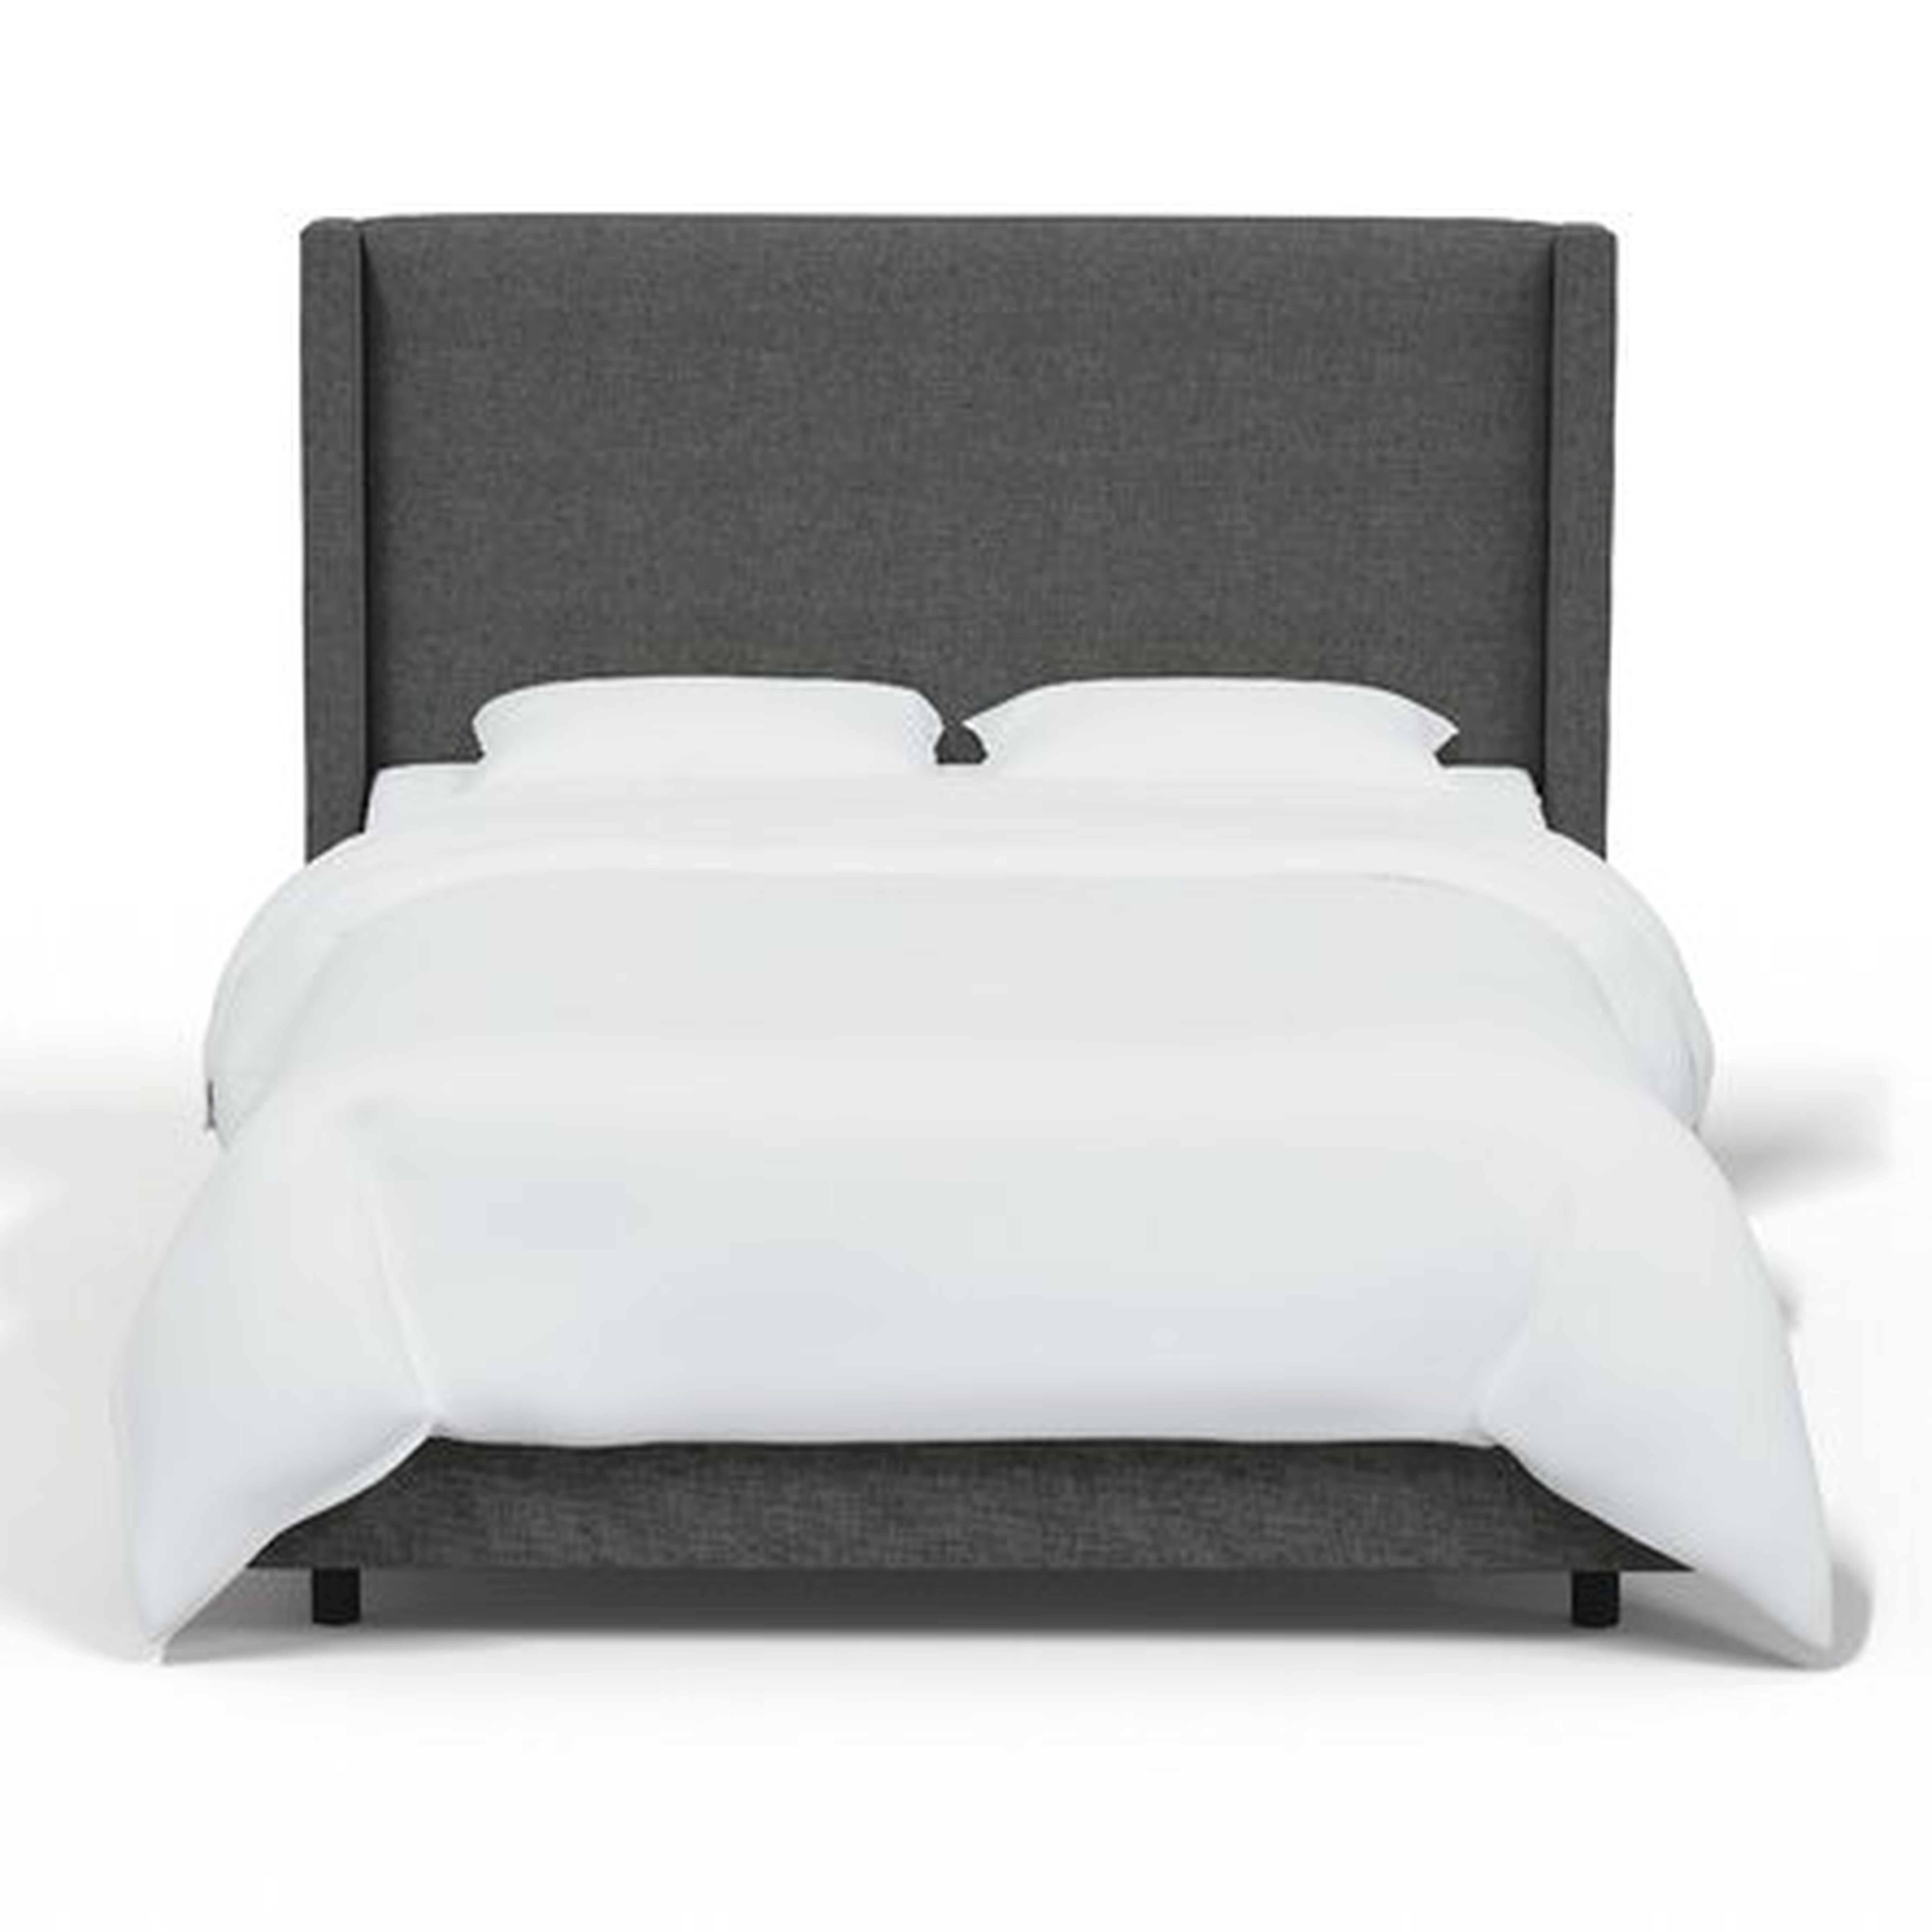 Hanson Upholstered Low Profile Standard Bed - Wayfair